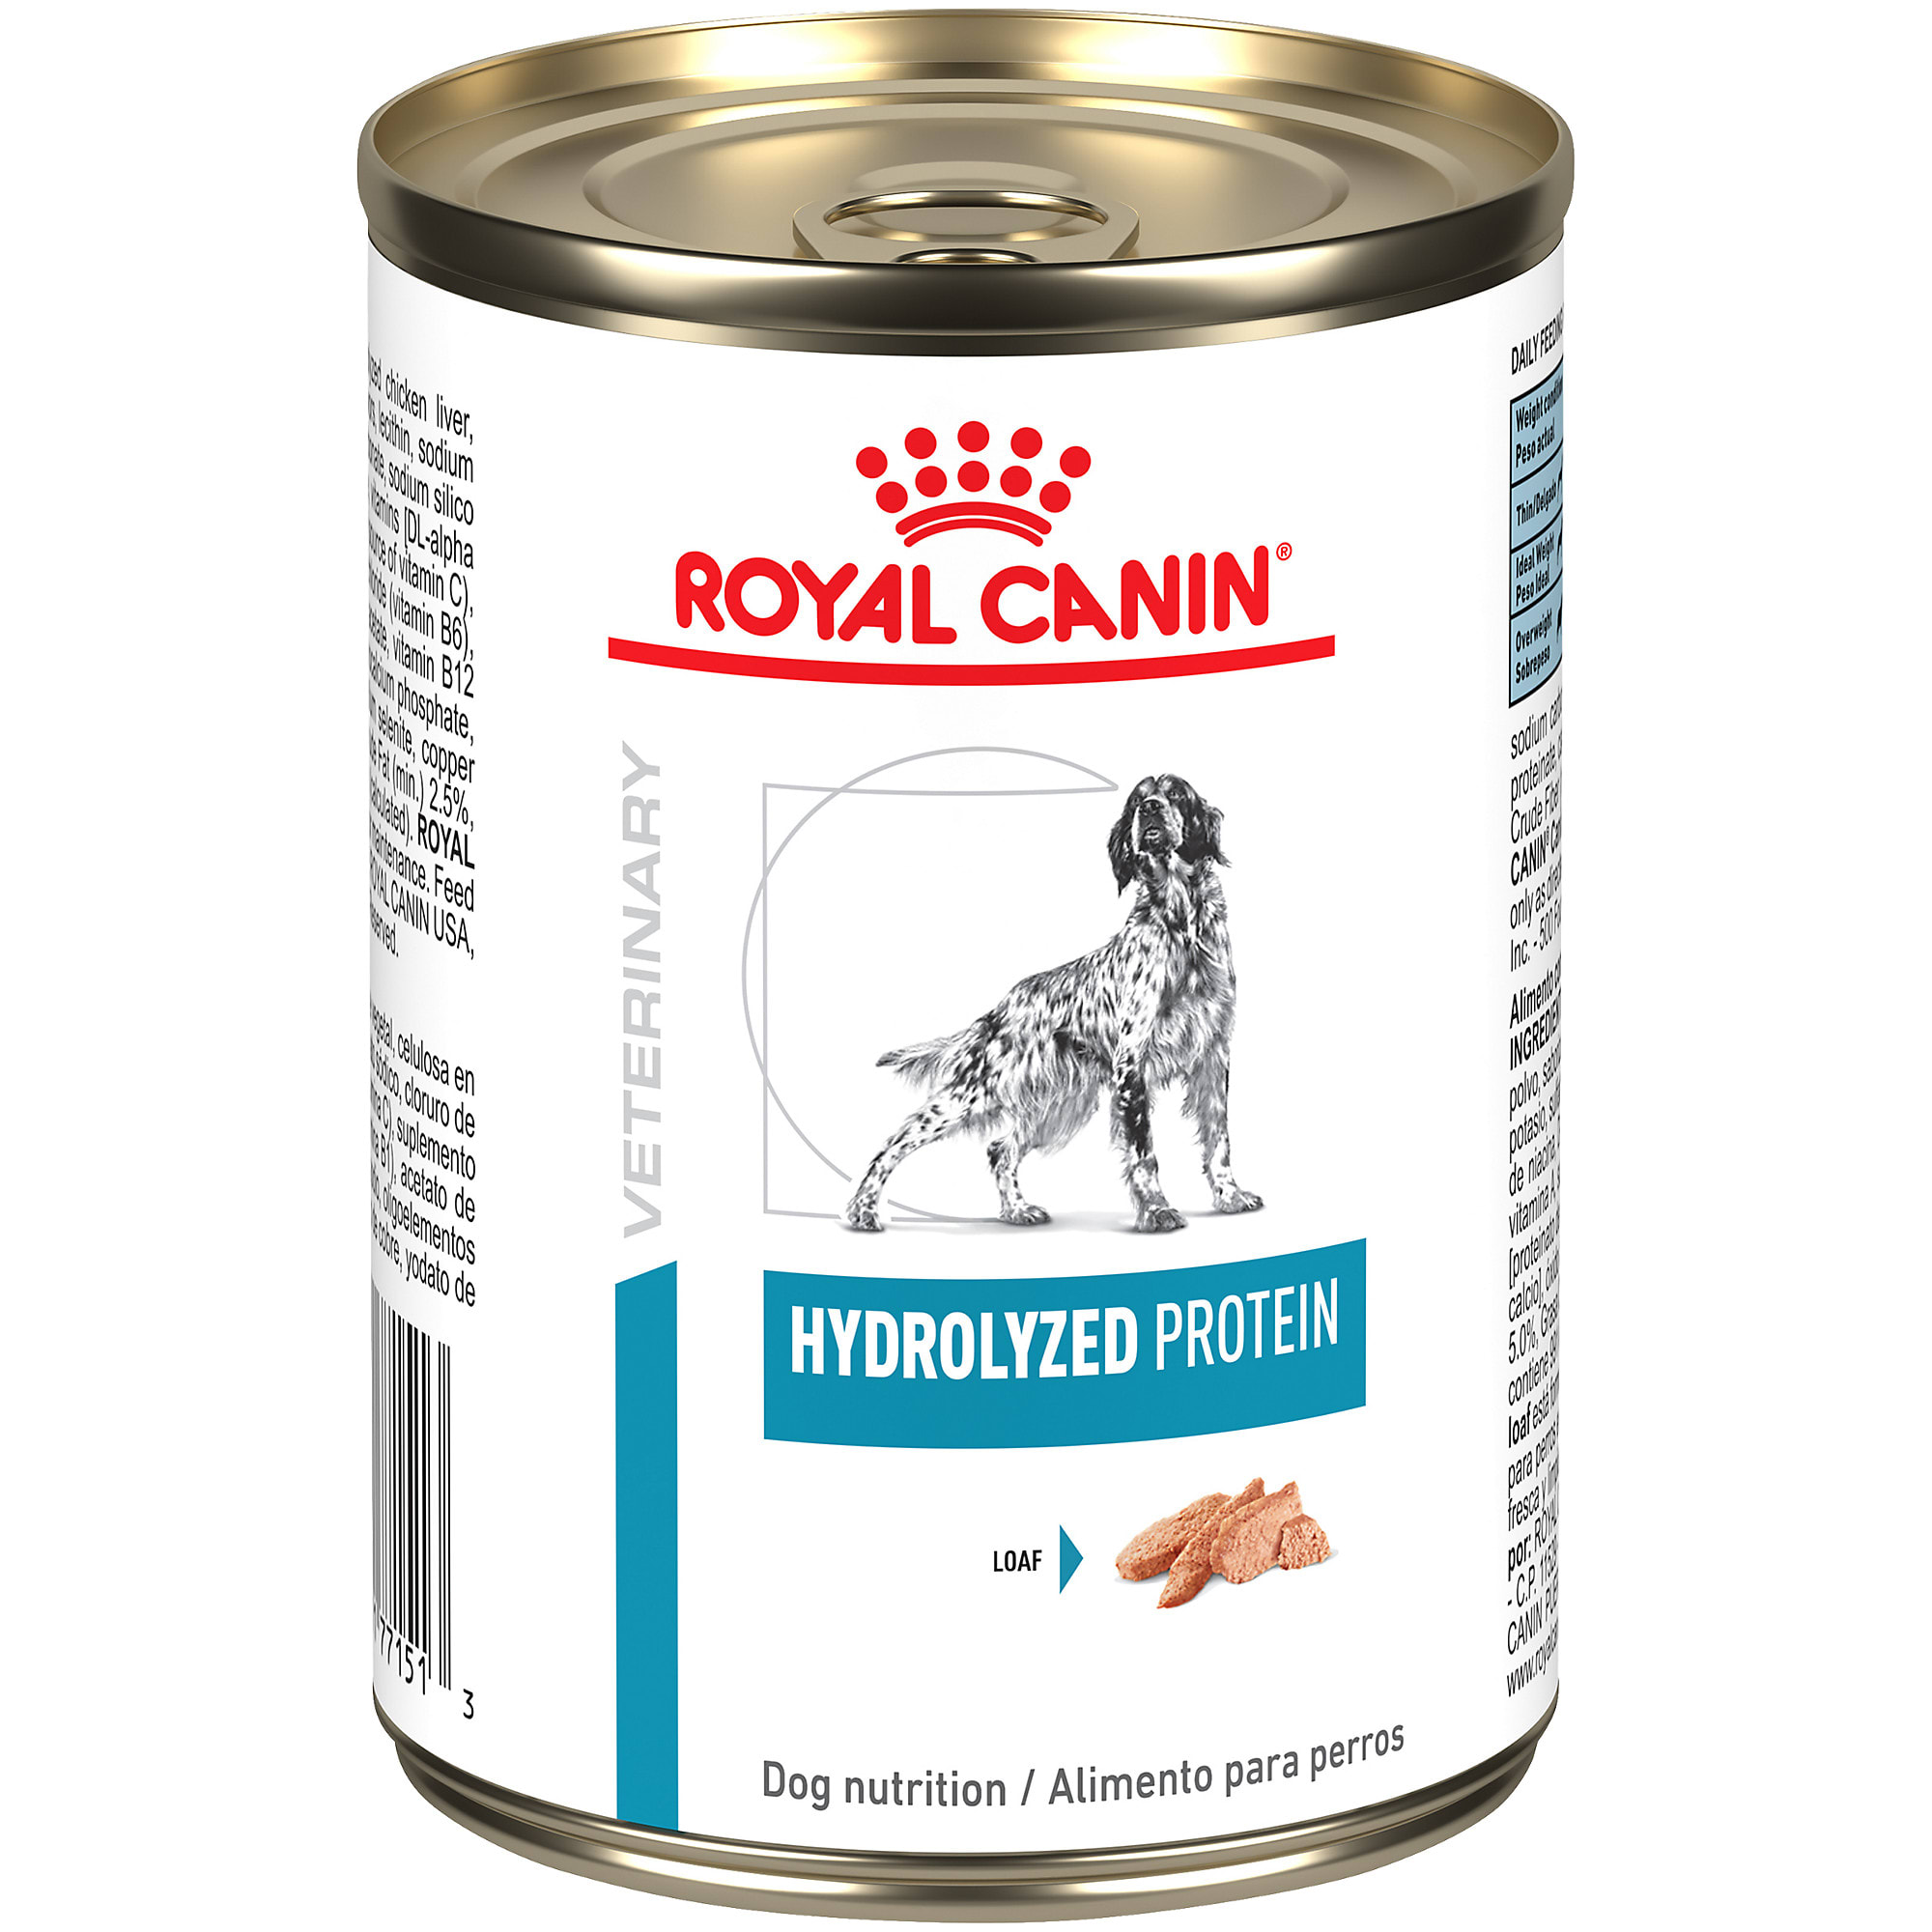 royal canin hp ps